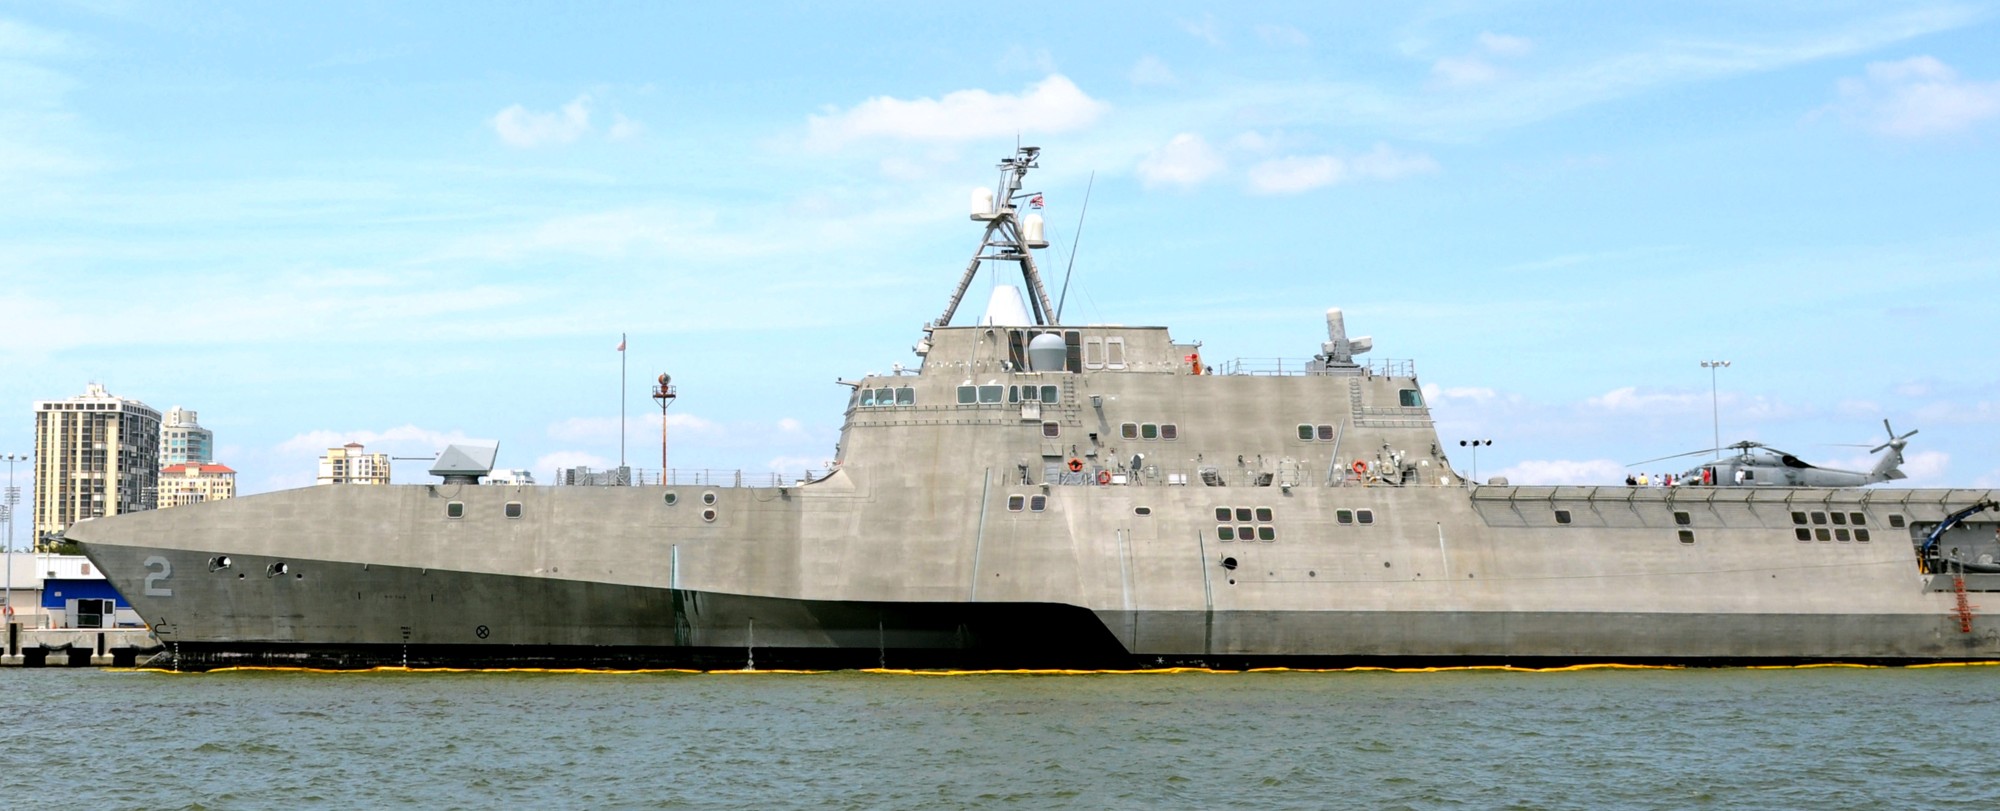 lcs-2 uss independence littoral combat ship us navy class 58 st. petersburg florida